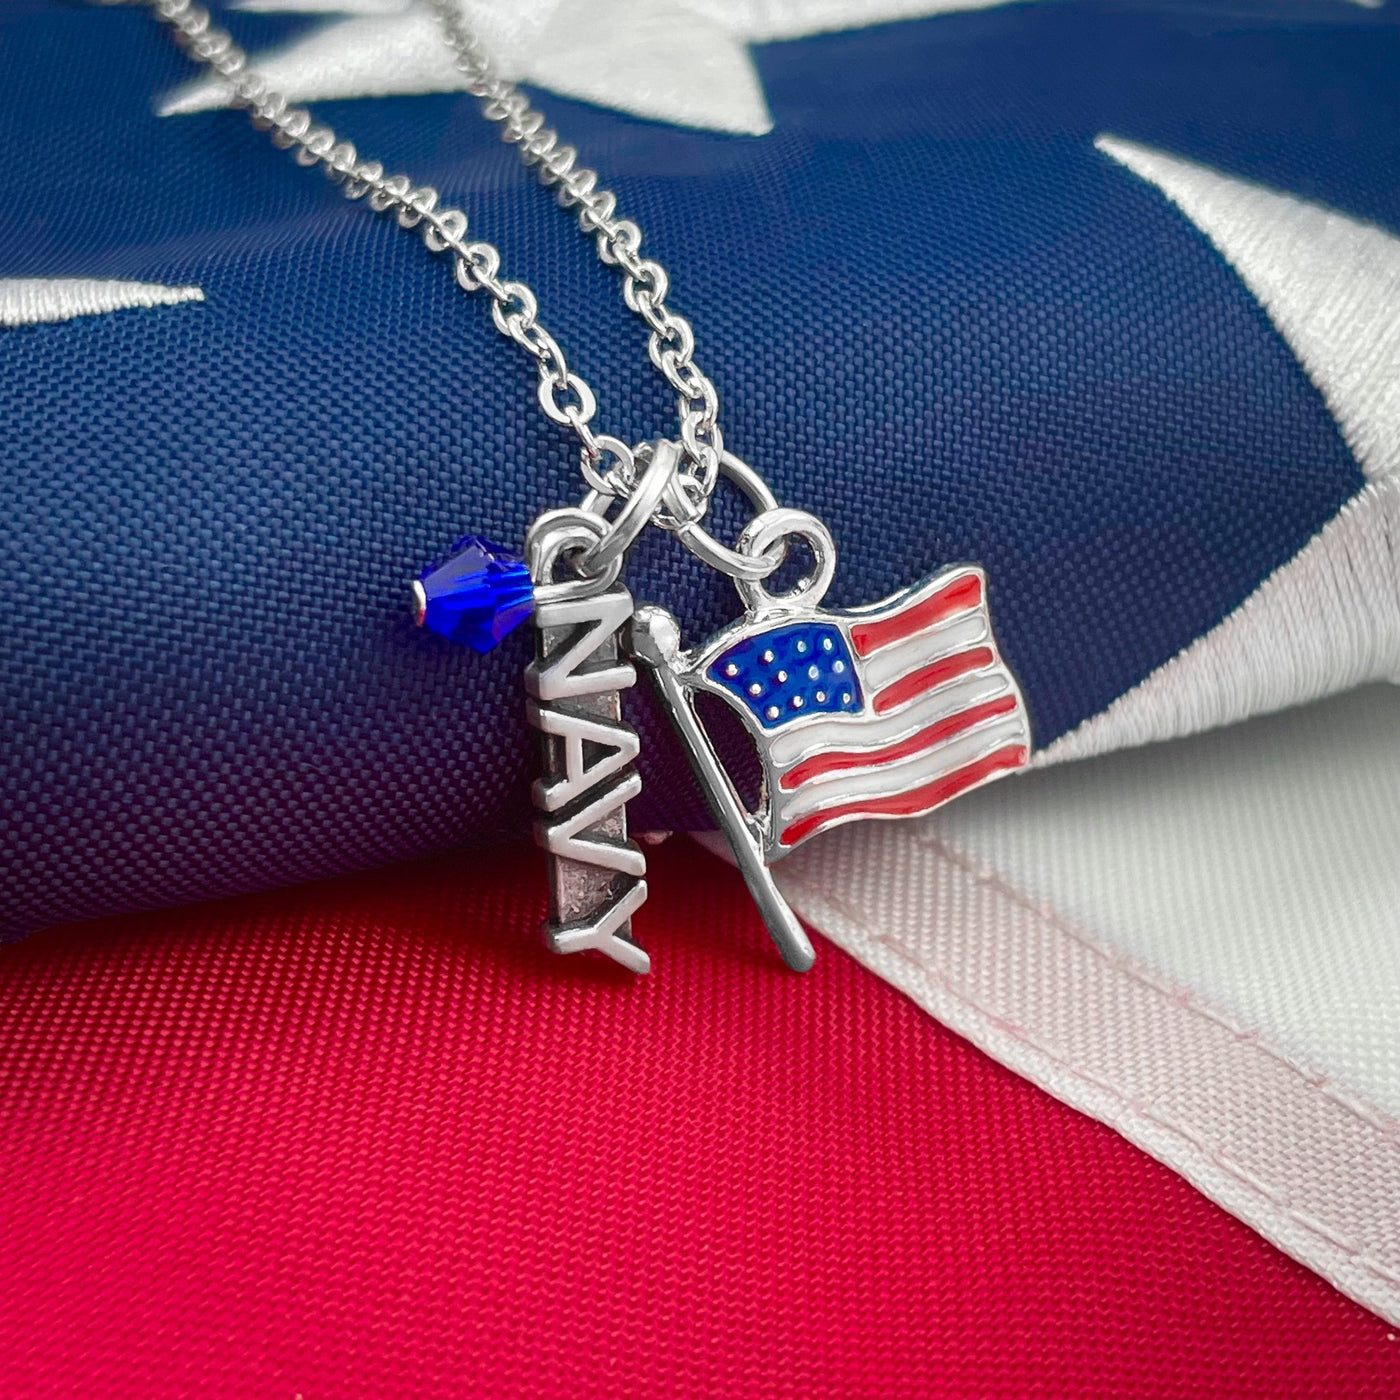 American Navy Necklace